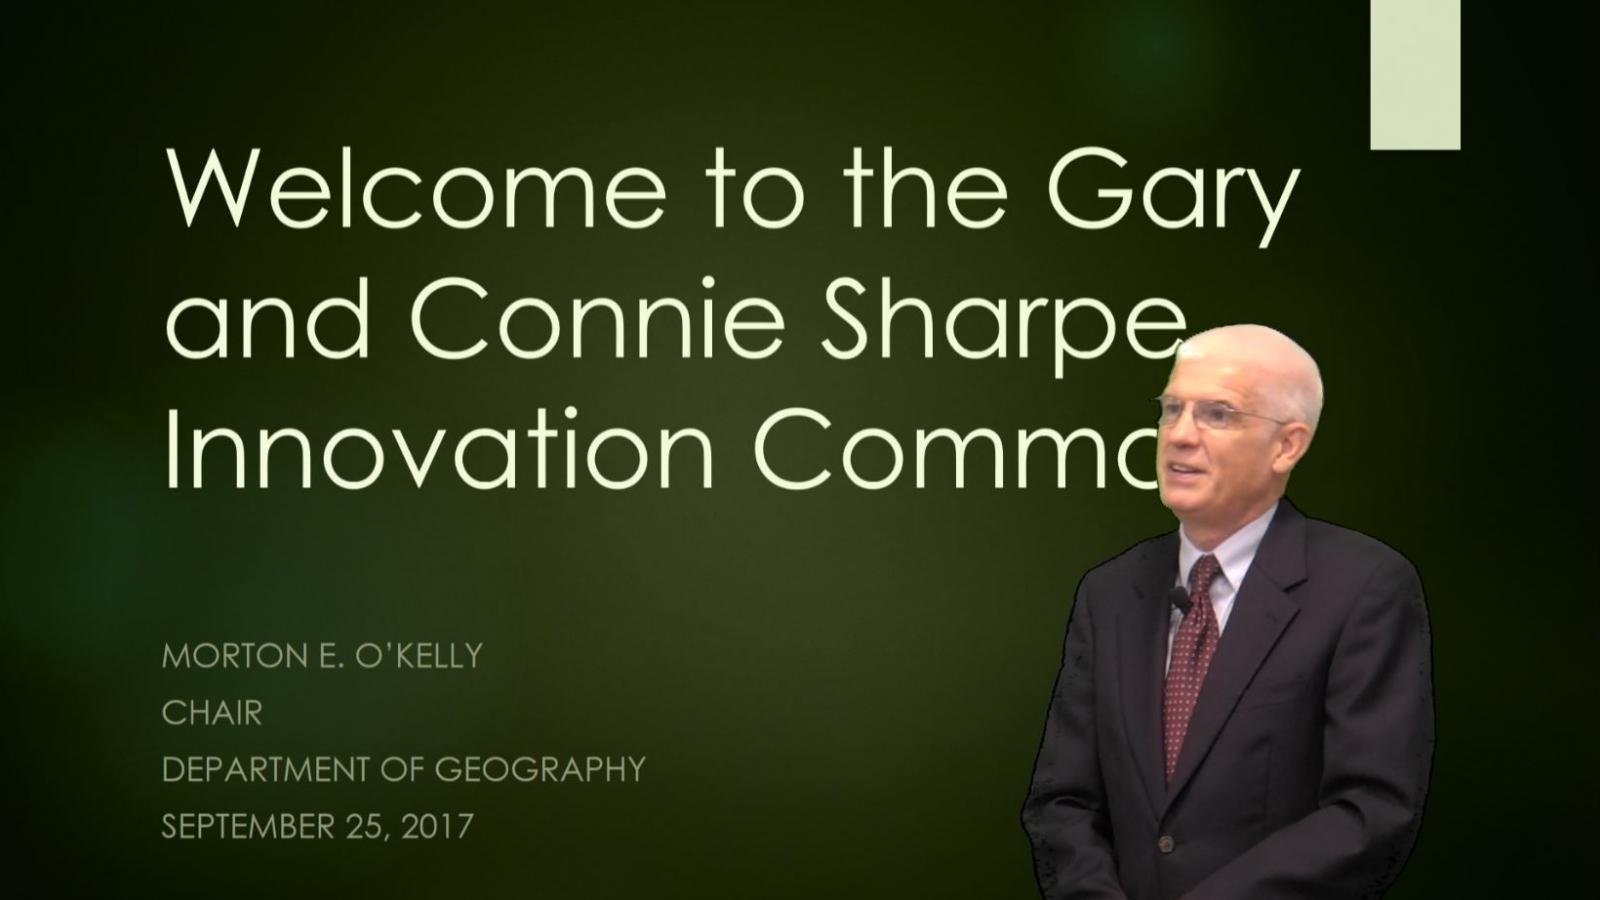 Sharpe Innovation Commons